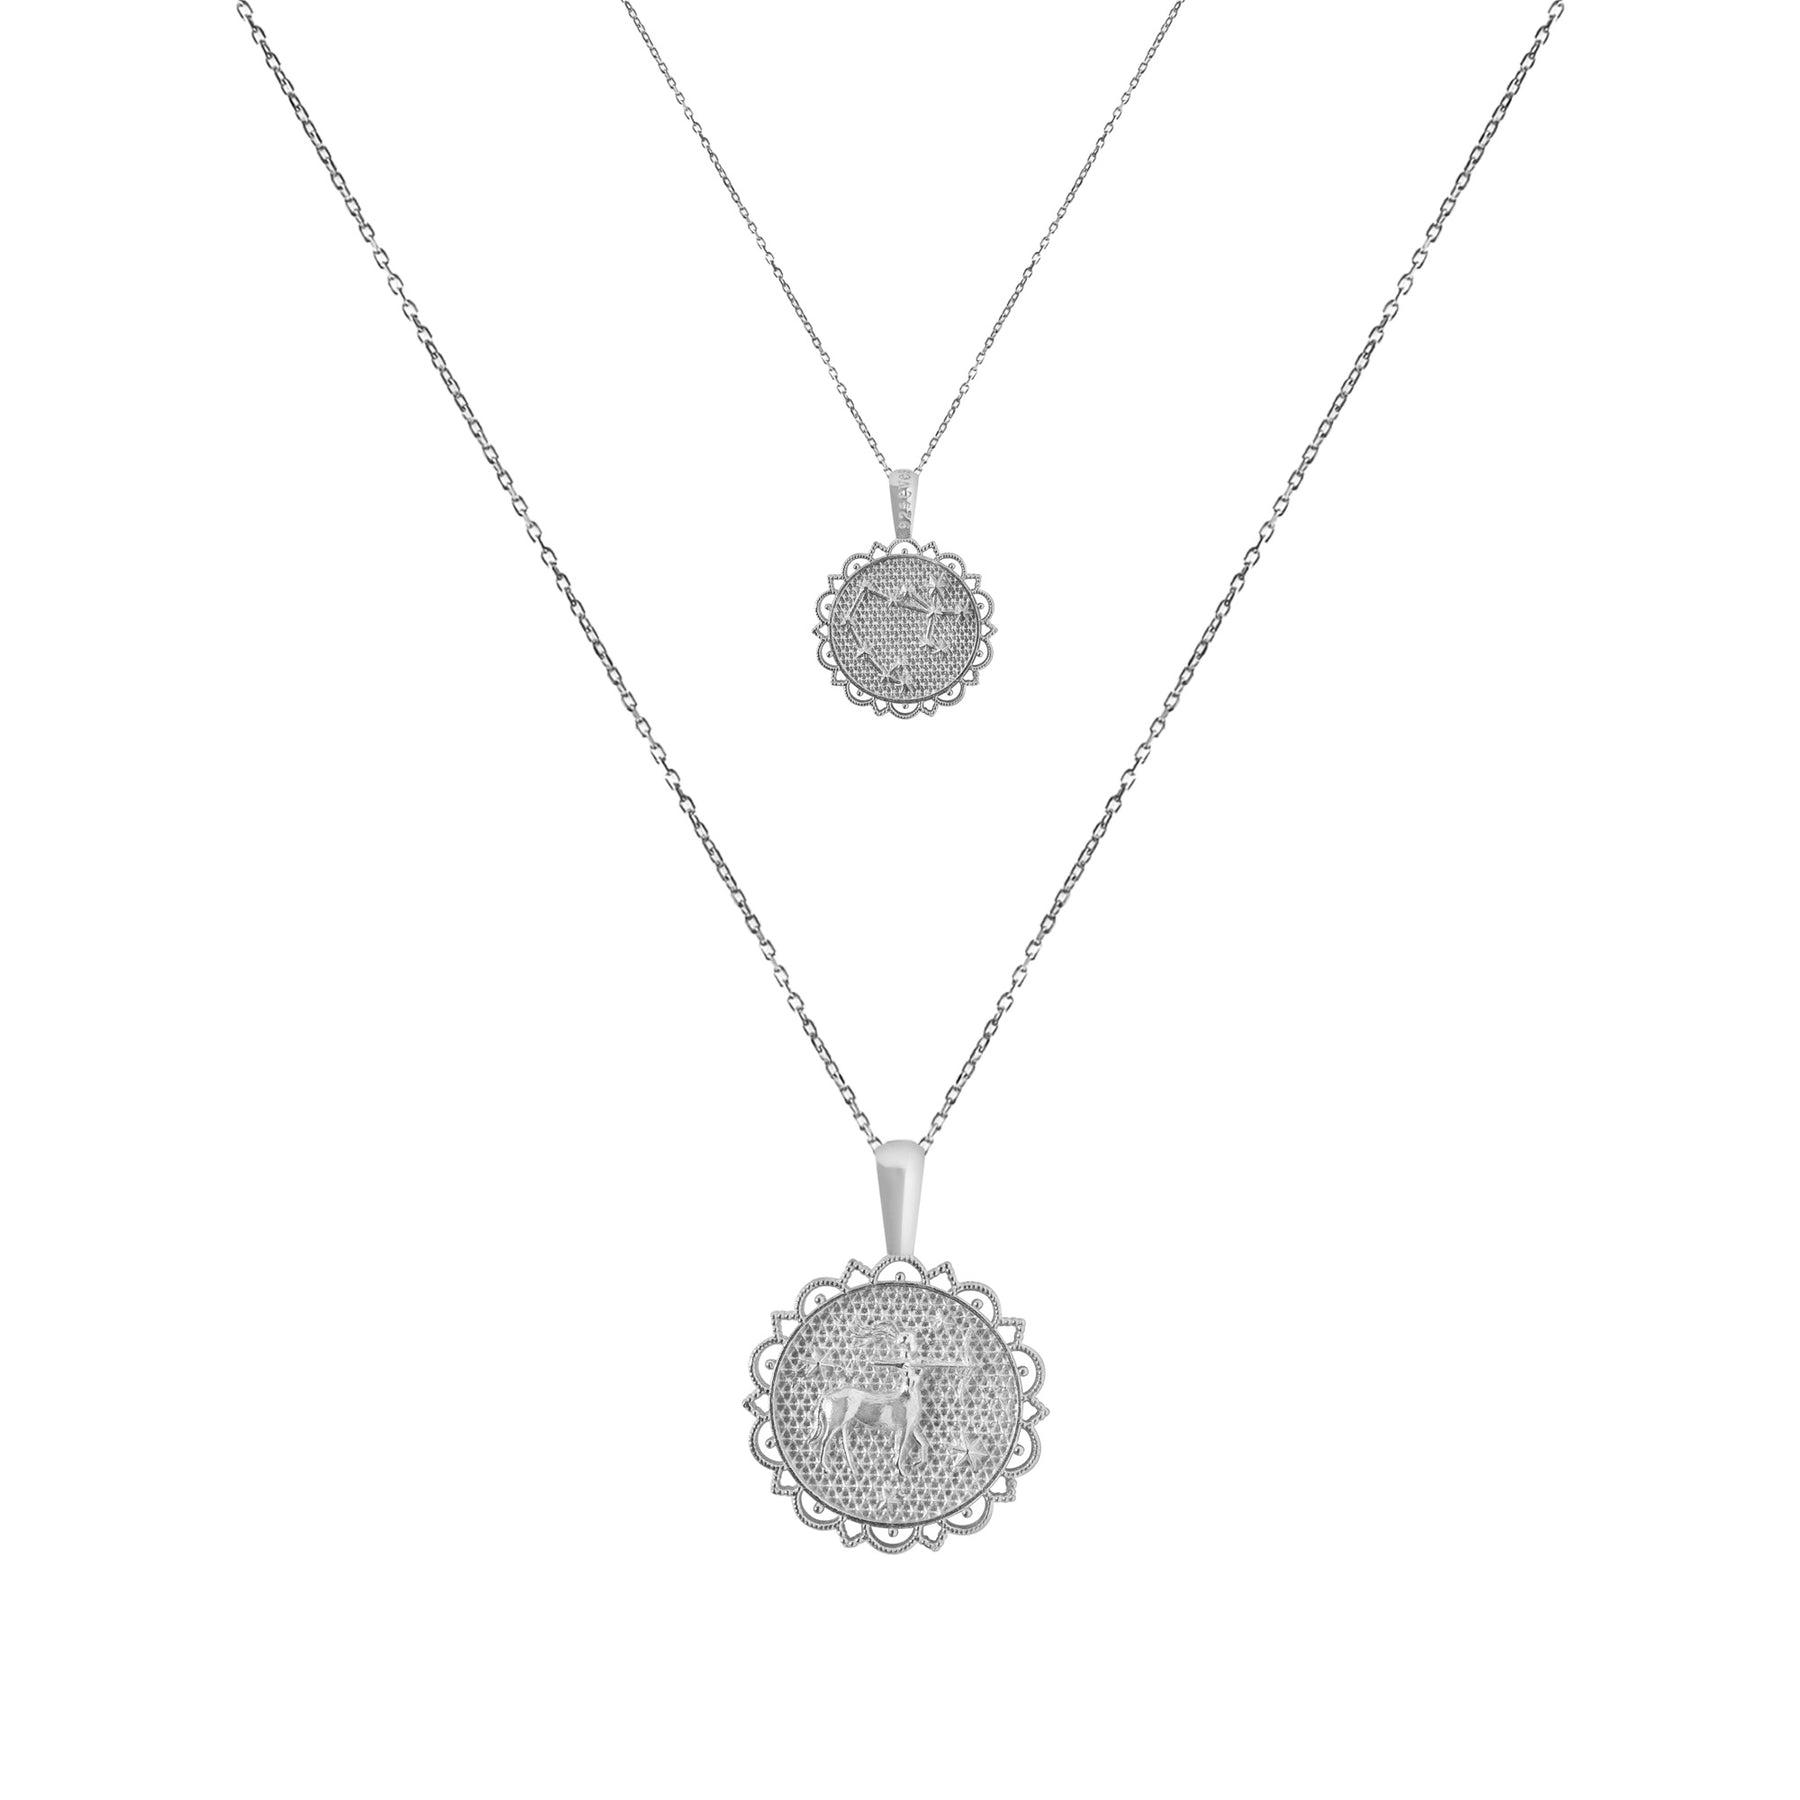 Schütze Halskette I Silber Sterling – eve\'s JEWEL 925 with Love I Handmade